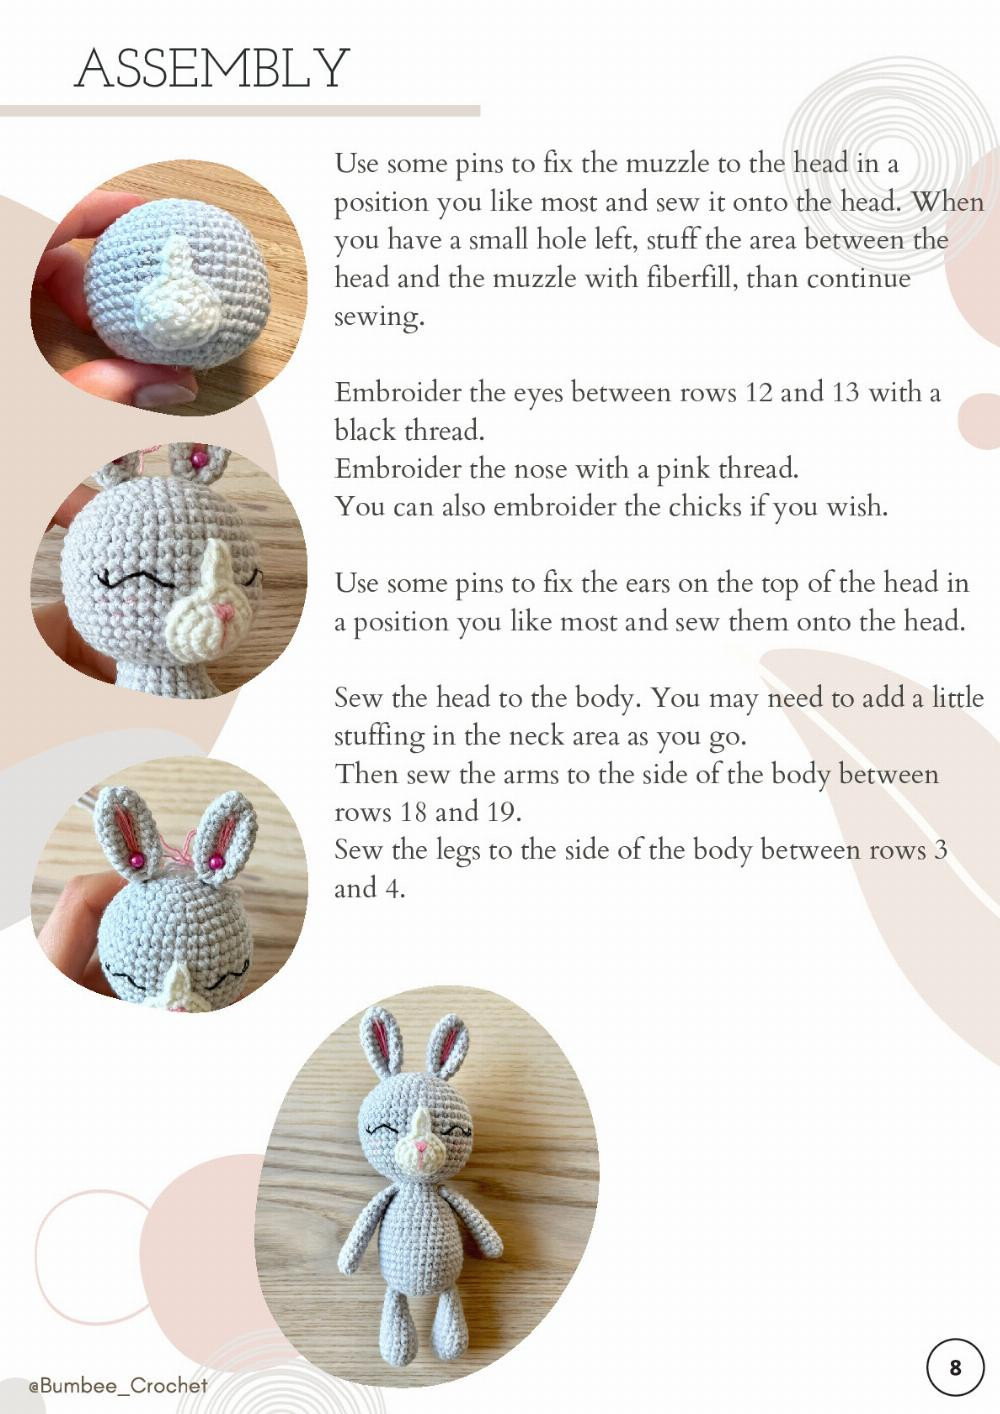 crochet pattern bonnie the bunny